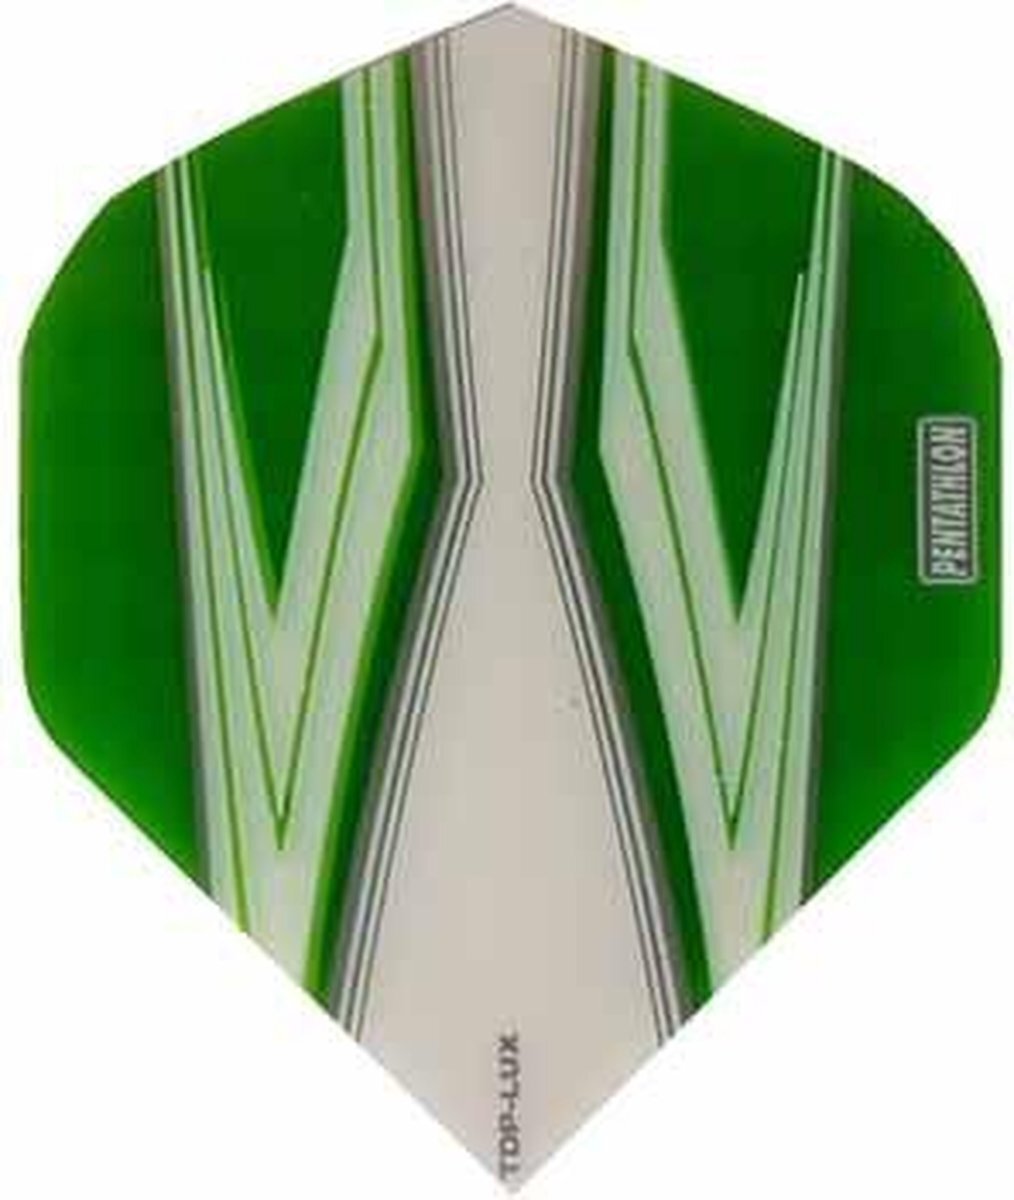 ABC Darts Flights Pentathlon - Spitfire W groen - 10 sets